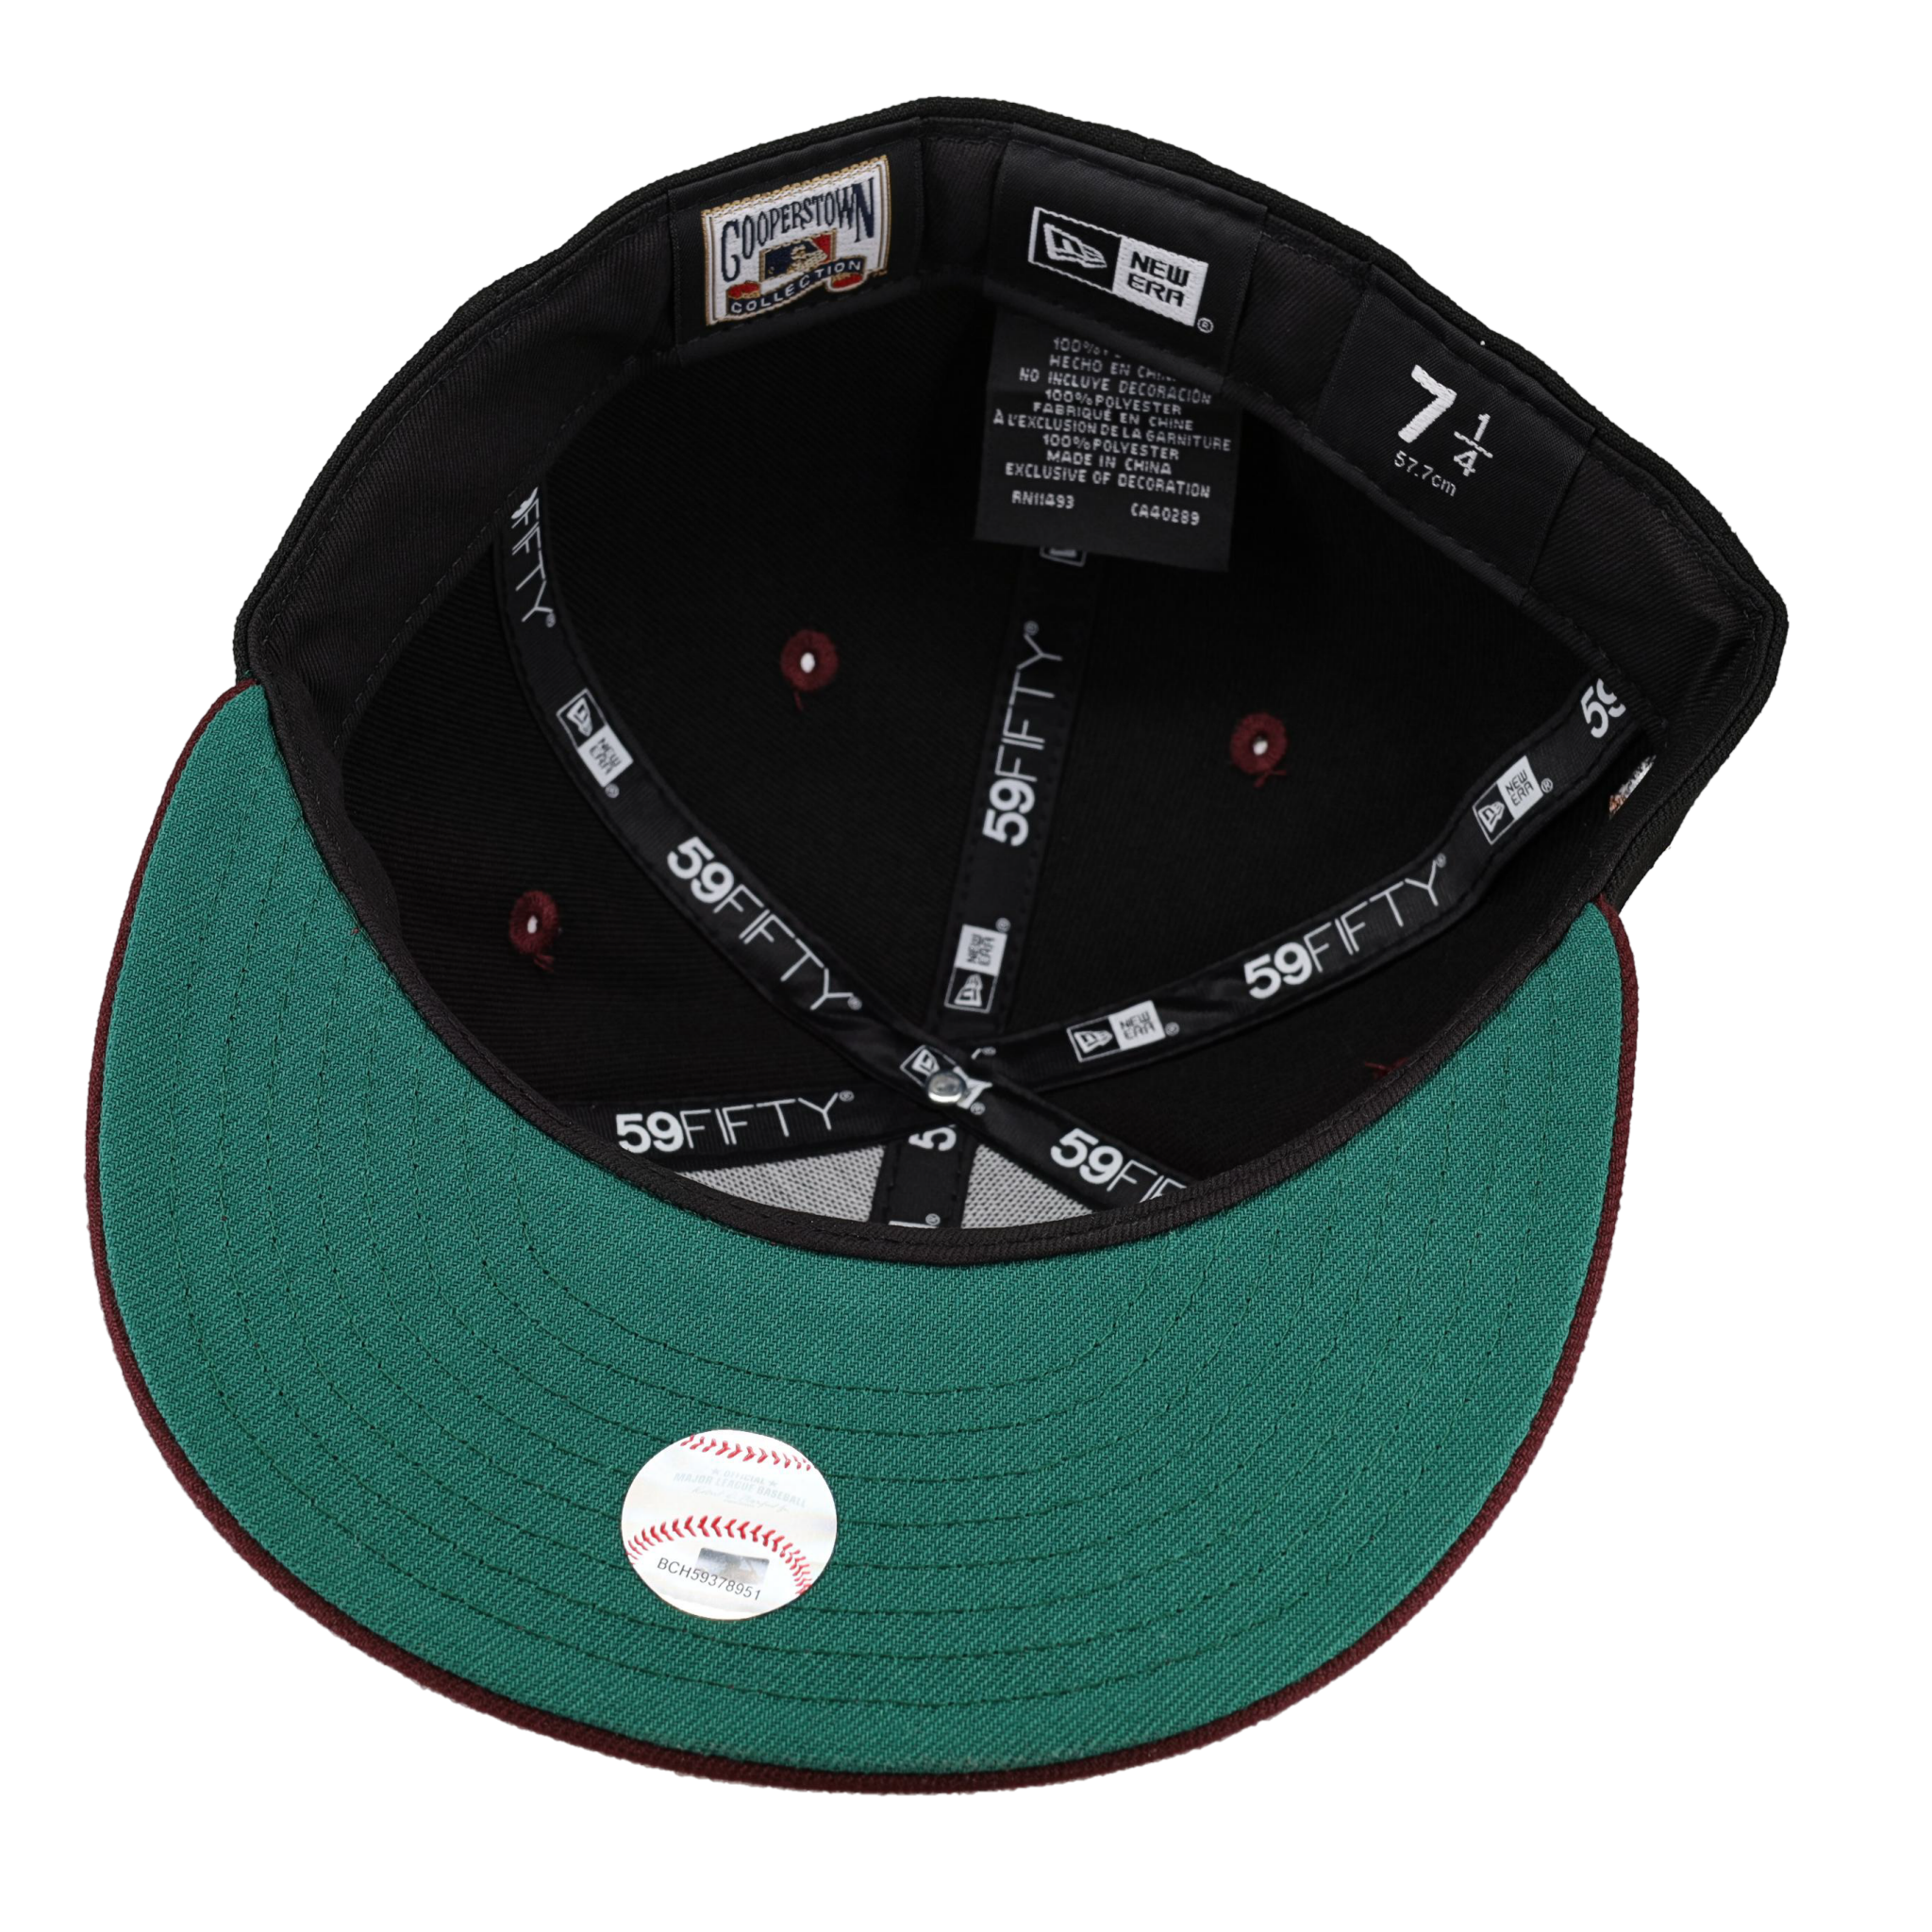 New Era World Class Atlanta Braves Hat 8